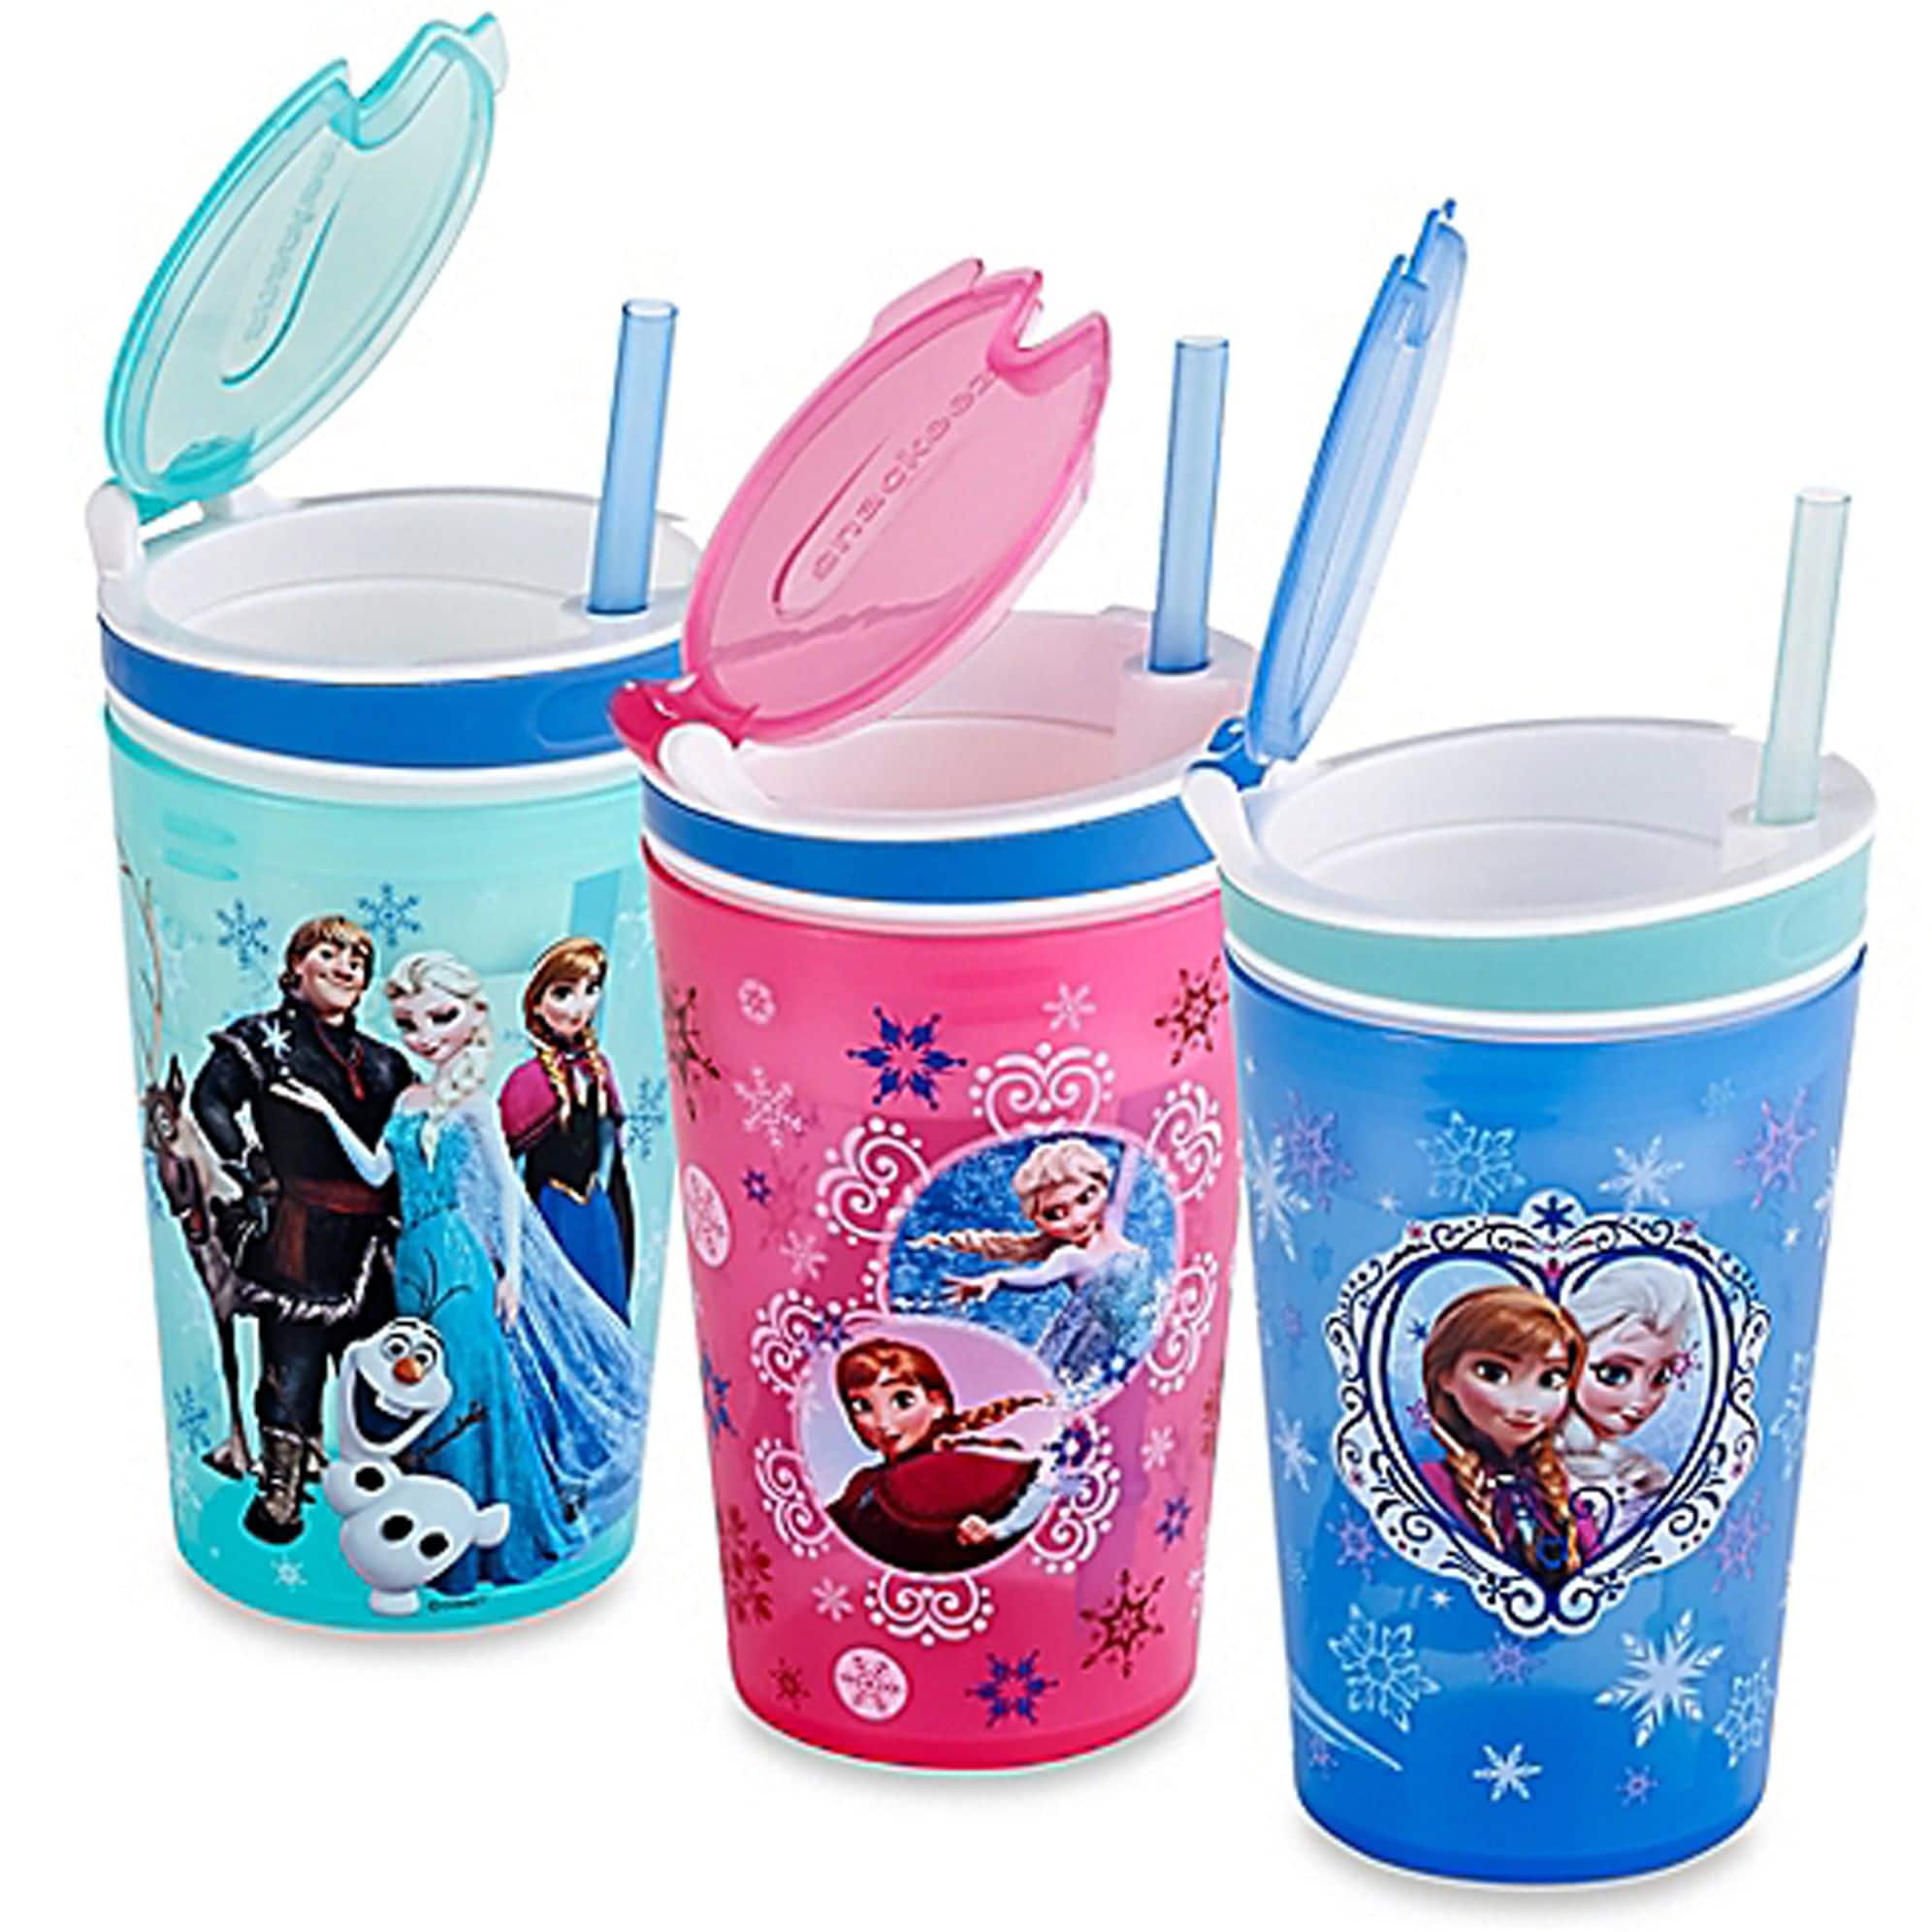 Snackeez Jr 2-in-1 Snack & Drink Cup Star Wars 7 Movie Complete Collection,  3 - Harris Teeter